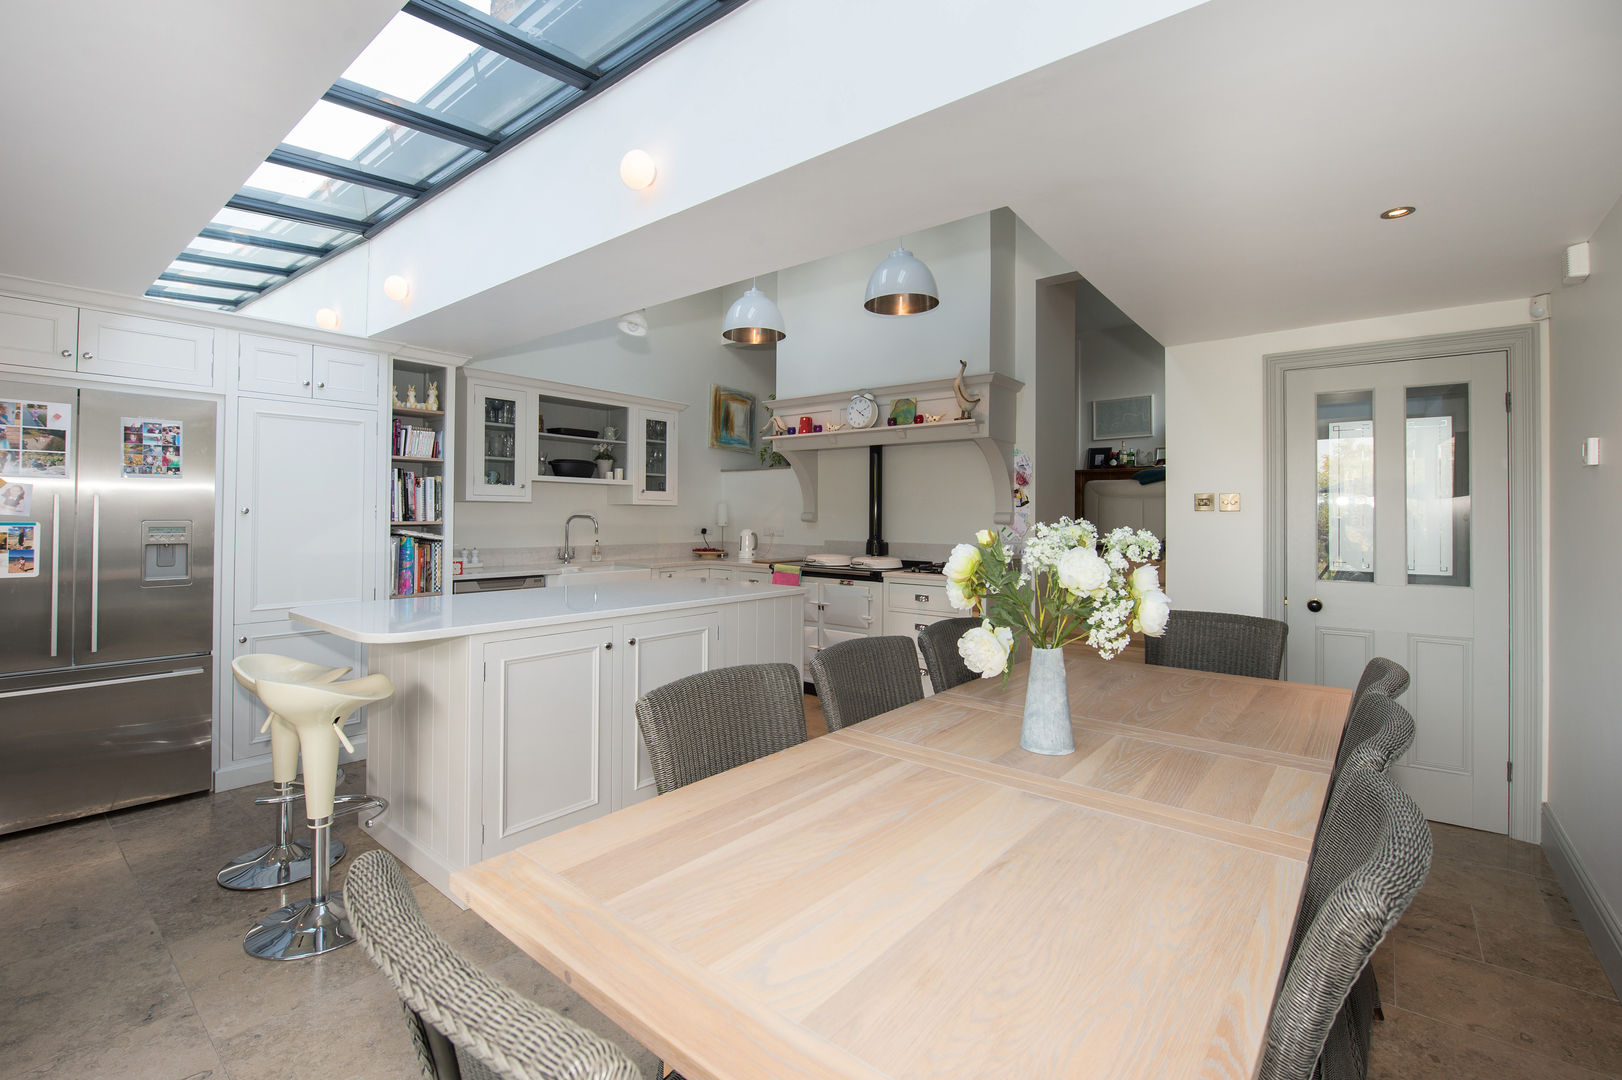 Doma architects - kitchen garden - interior doma architects Moderne keukens